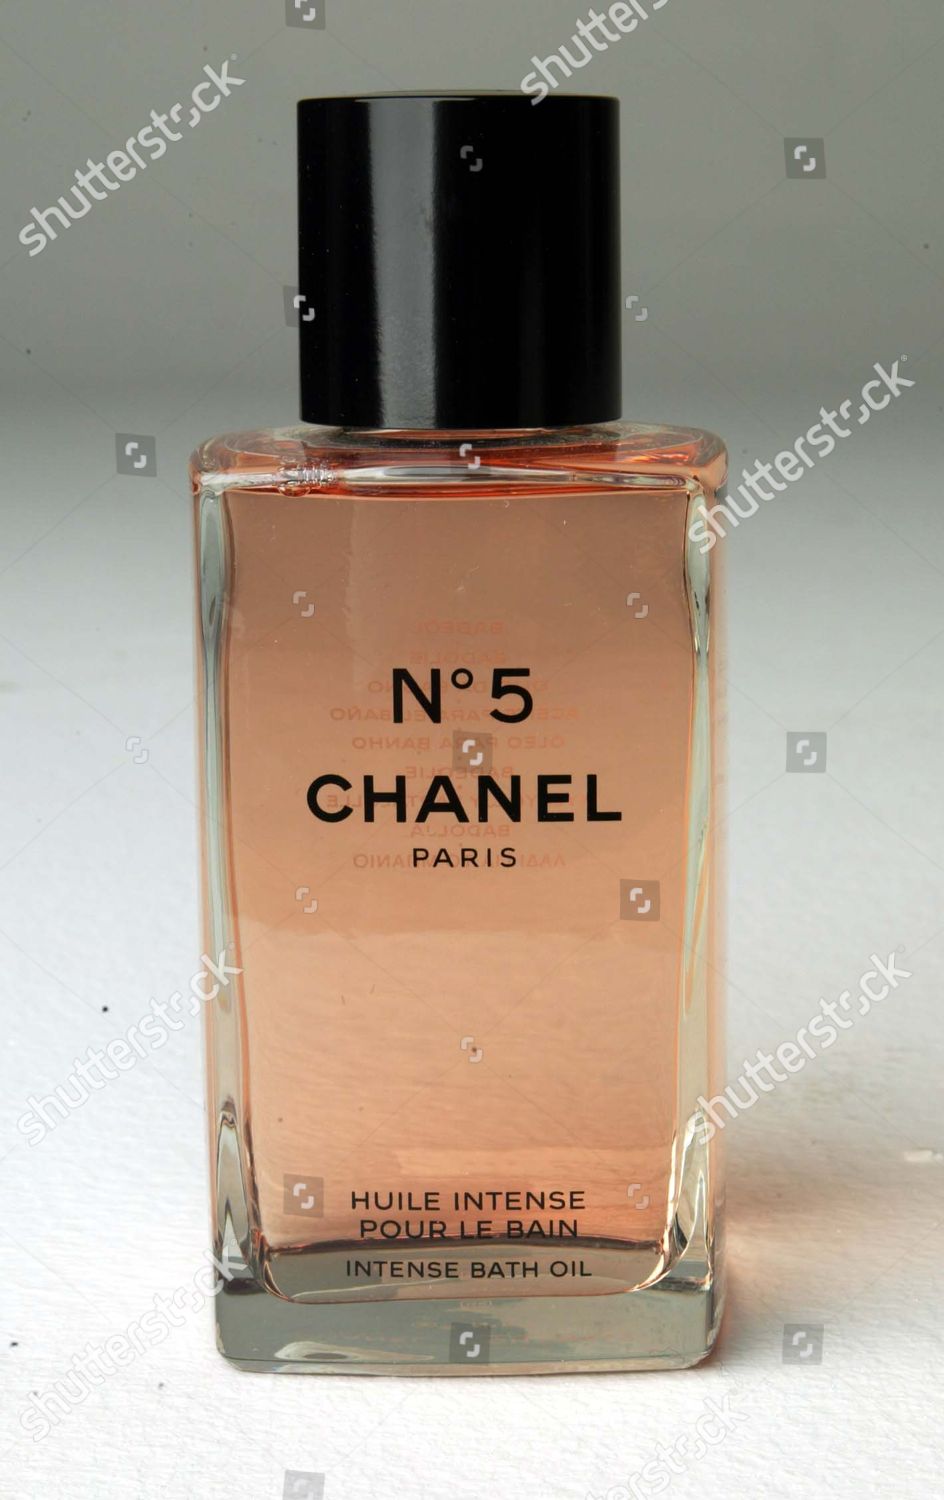 Chanel No5 Intense Bath Oil A65 Redactionele stockfoto